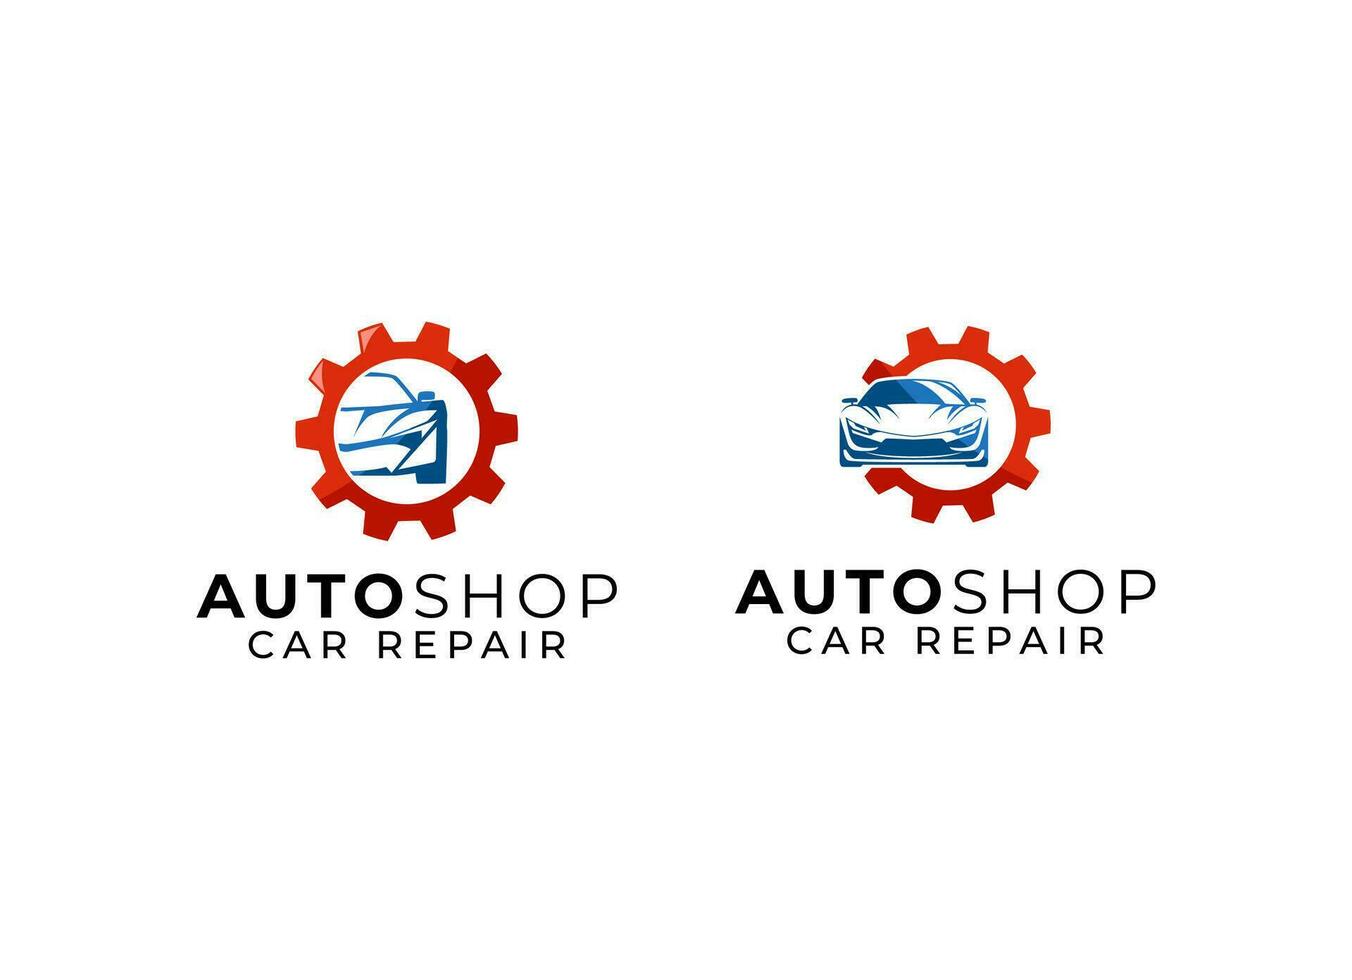 Automotive car shop, garage, dealer logo design. vector